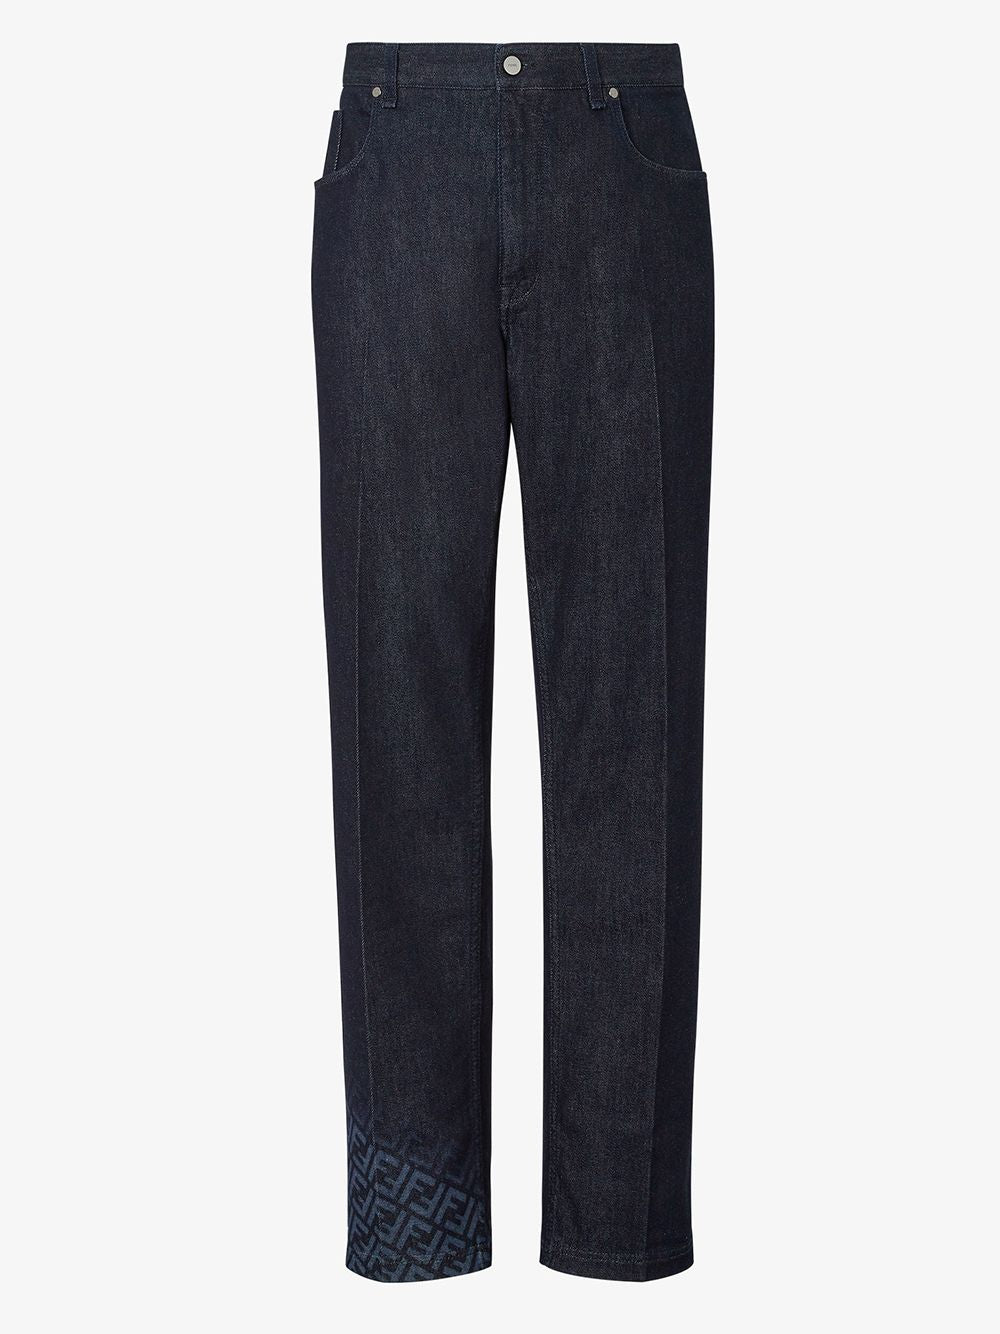 FENDI Men's Regular-Fit Denim Jeans with Leather Logo Patch